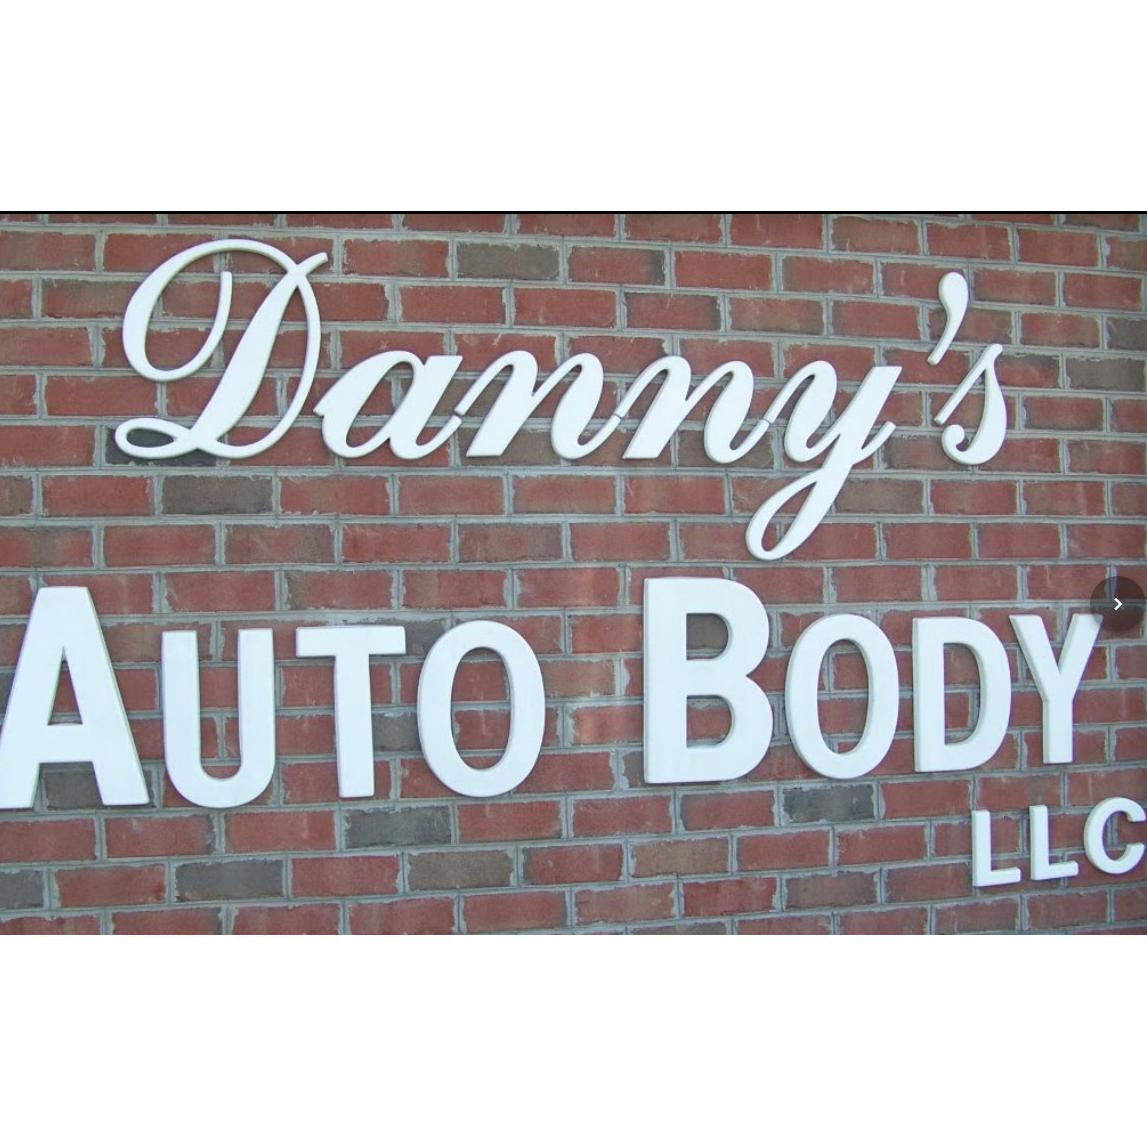 Danny's Auto Body, LLC Photo